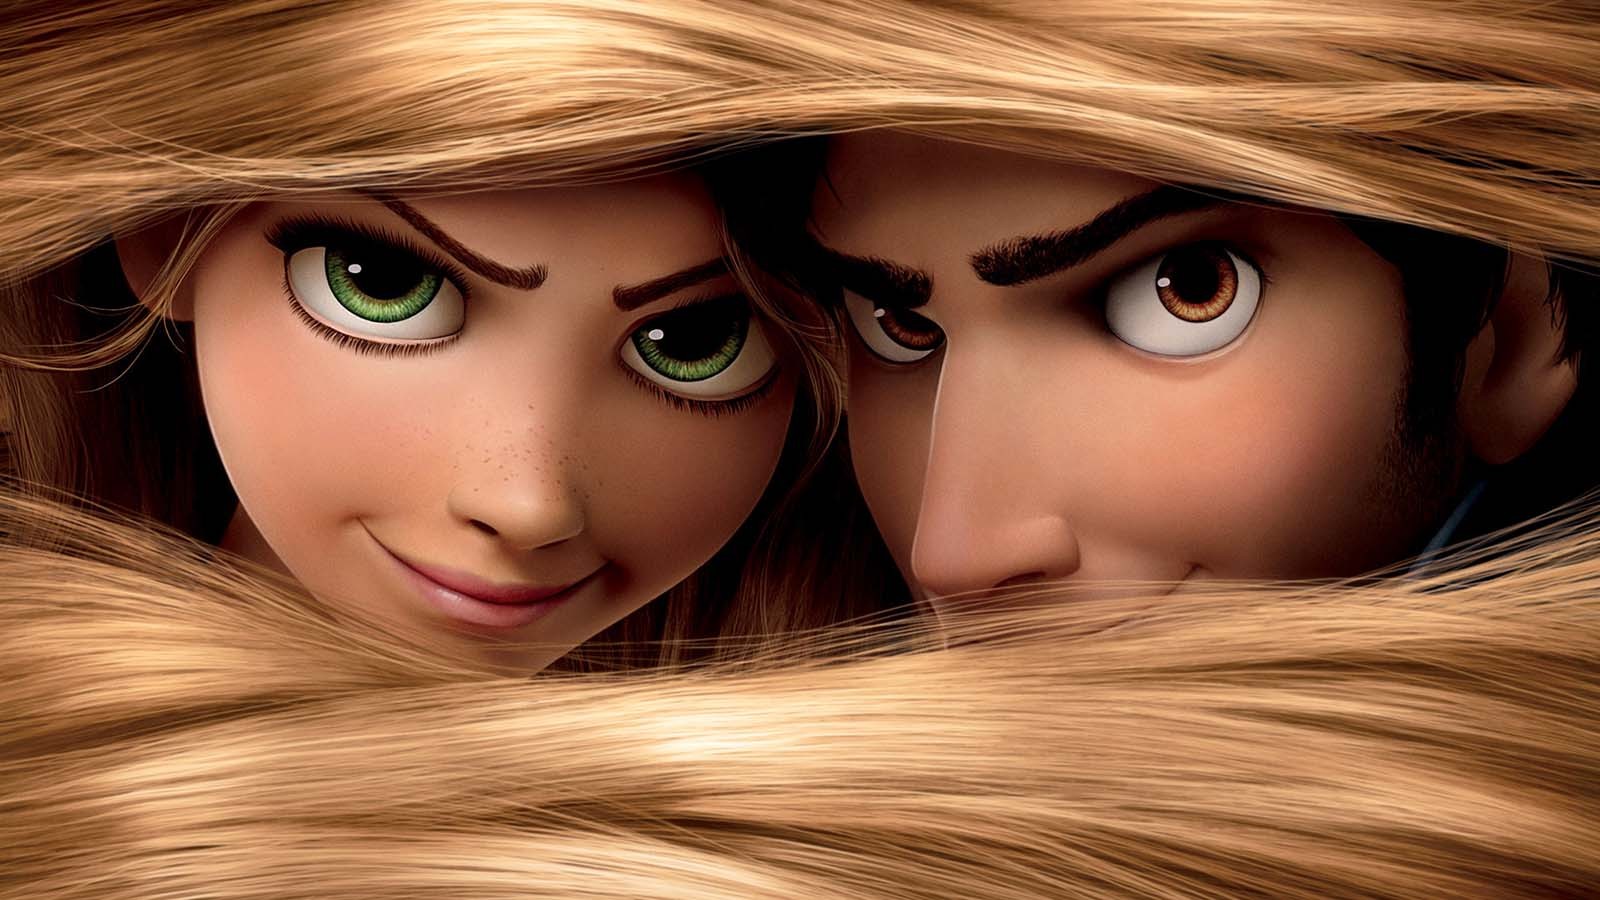 General 1600x900 Tangled green eyes movies animated movies Disney 2010 (Year) blonde long hair Disney princesses closeup digital art